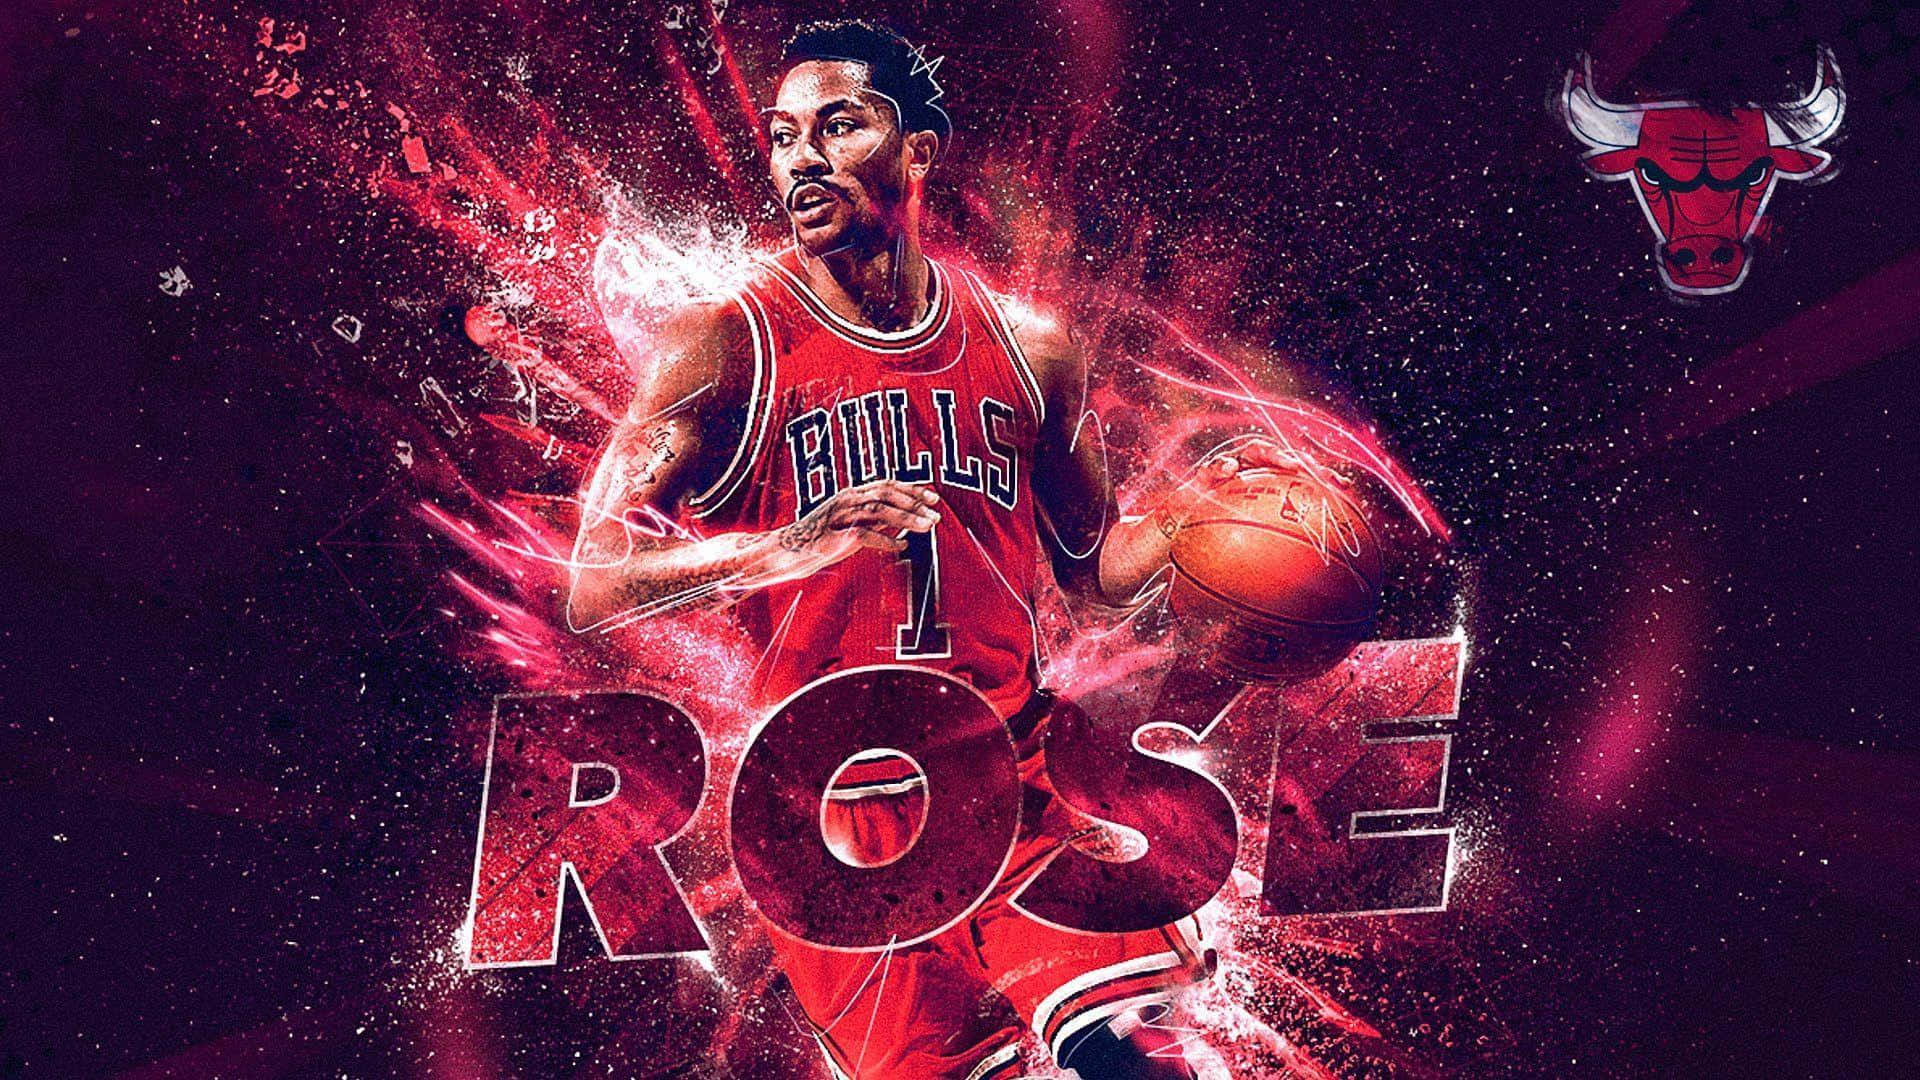 Derrick Rose Background Wallpaper